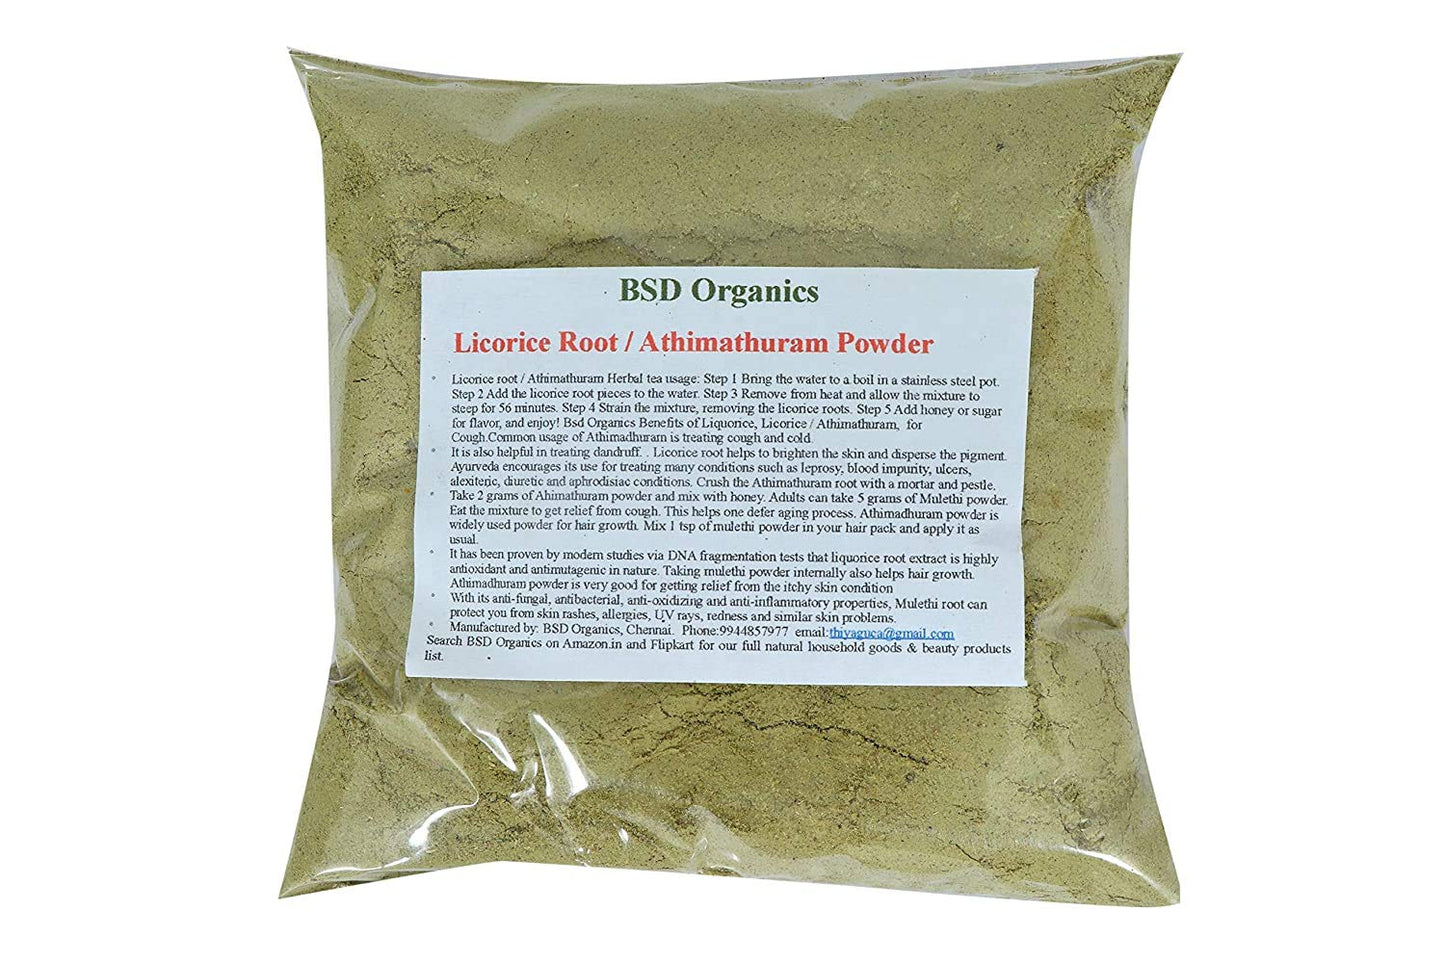 Licorice Root / Athimathuram Powder for Tea and More - 200 Gm / 7.05 Oz